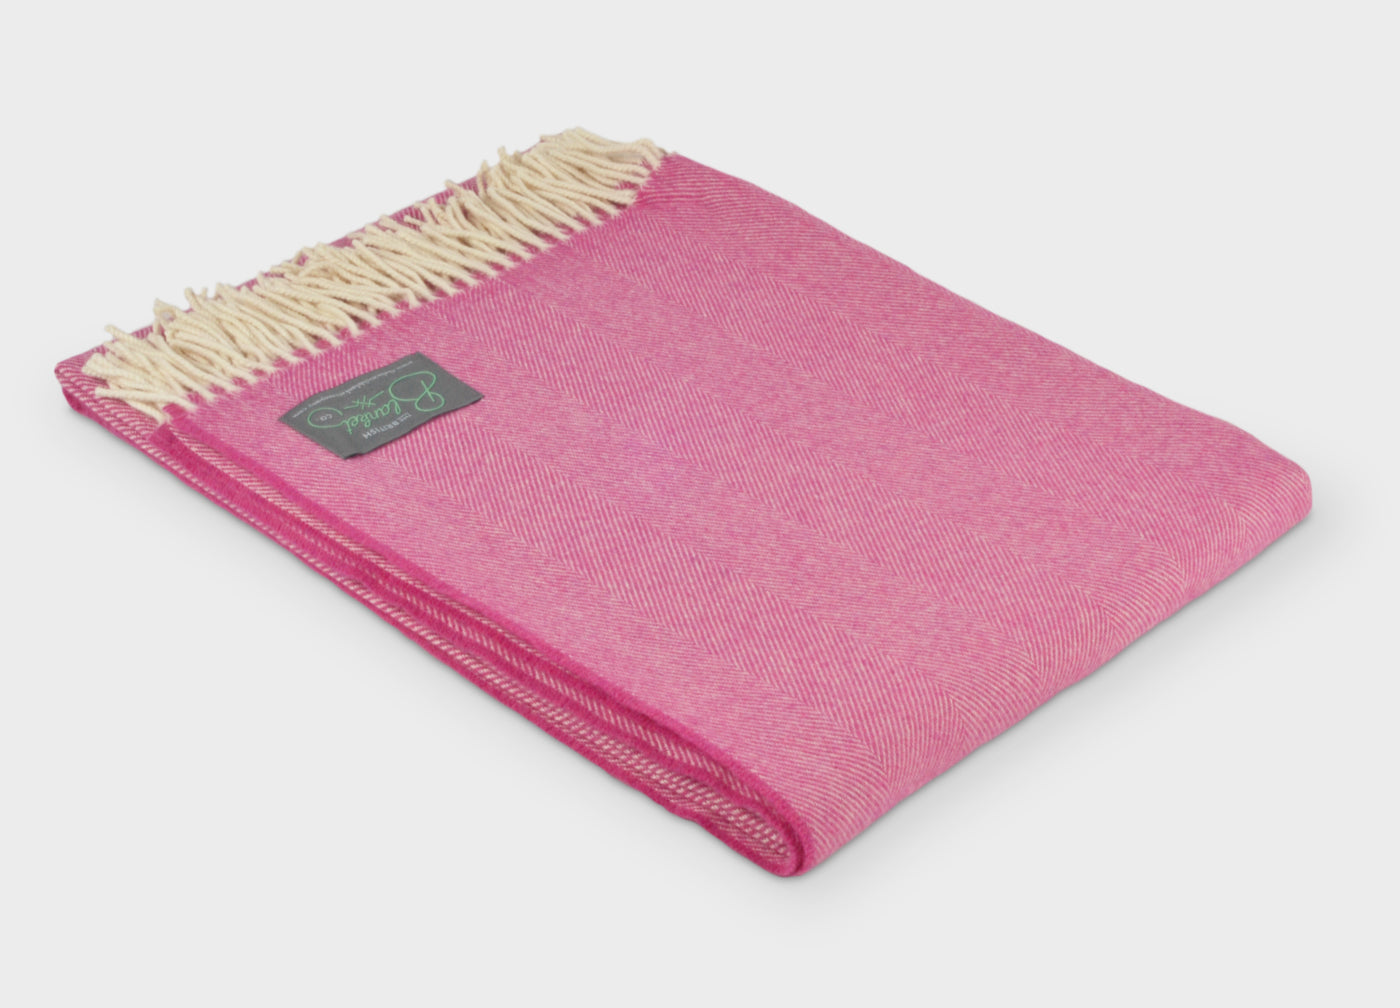 Folded large pink merino herringbone wool throw by The British Blanket Company